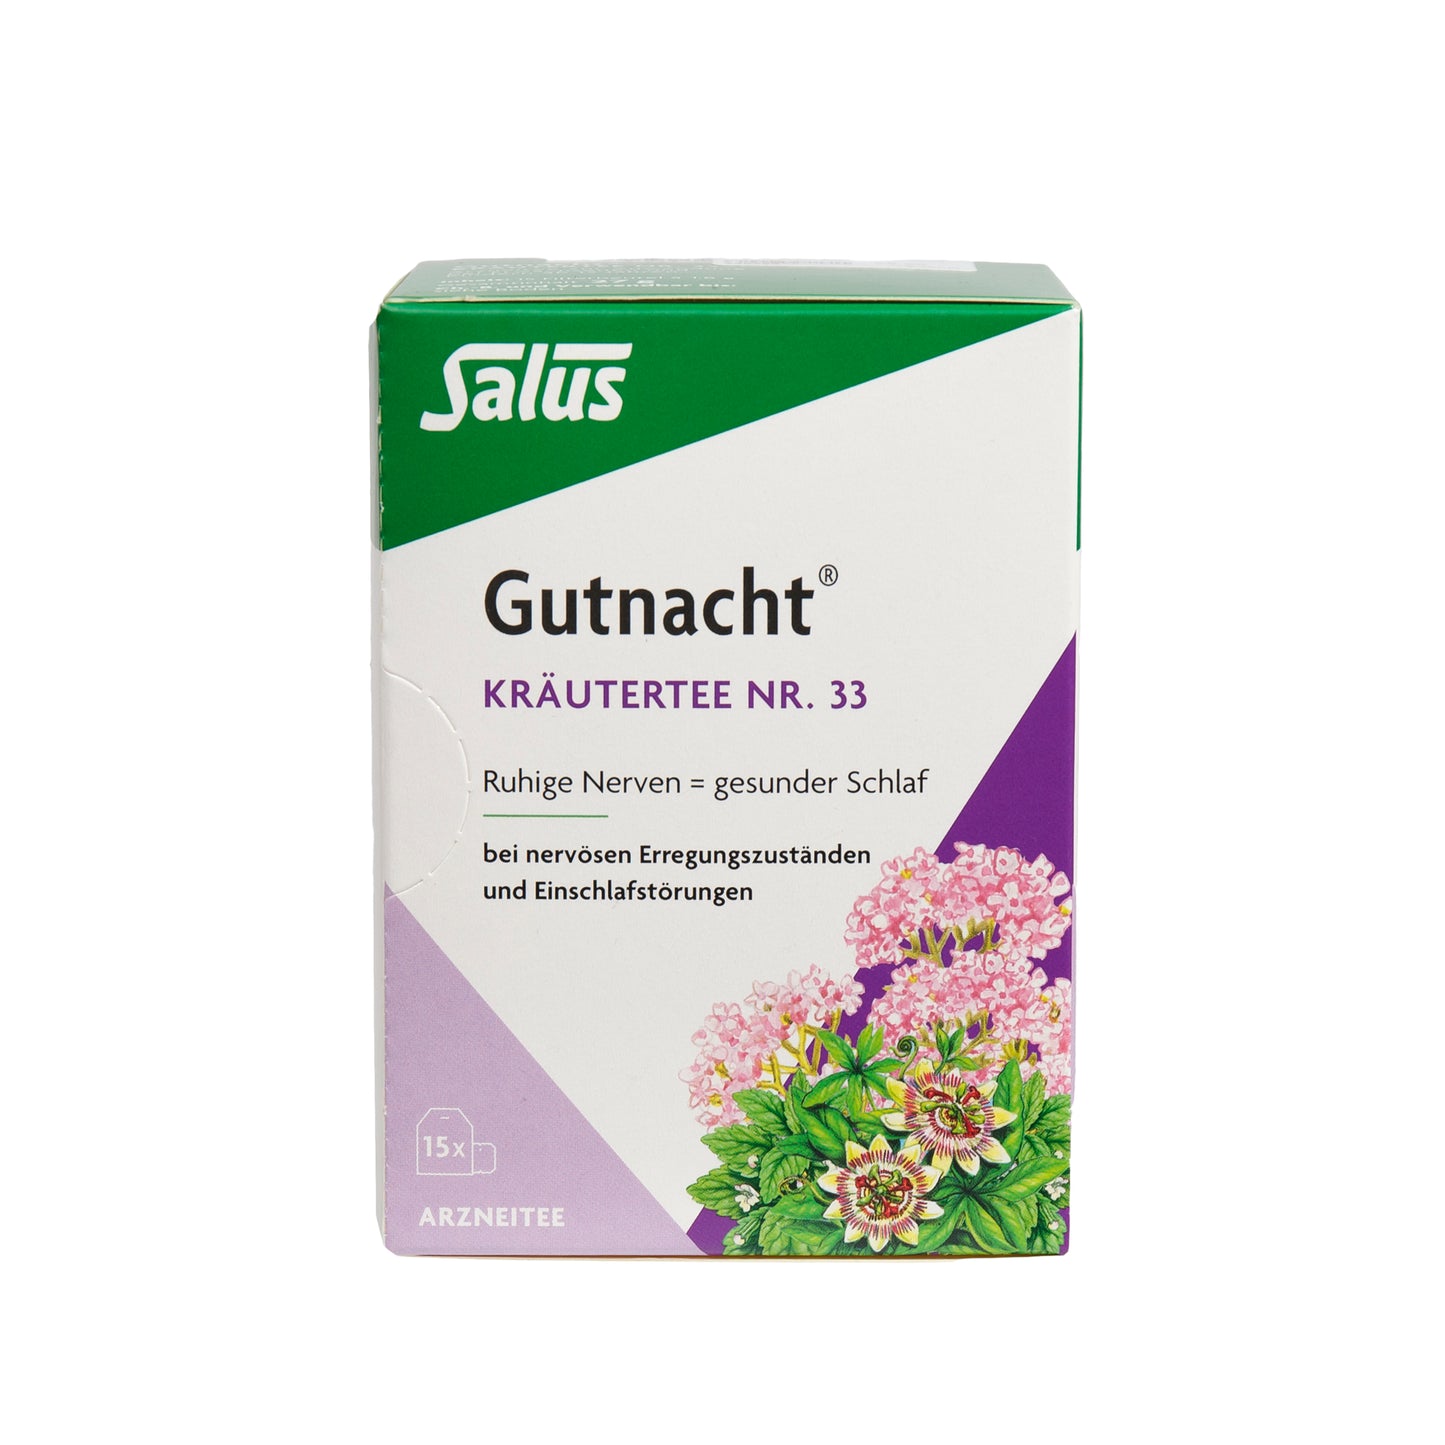 Primary Image of Gutnacht Tea No. 33